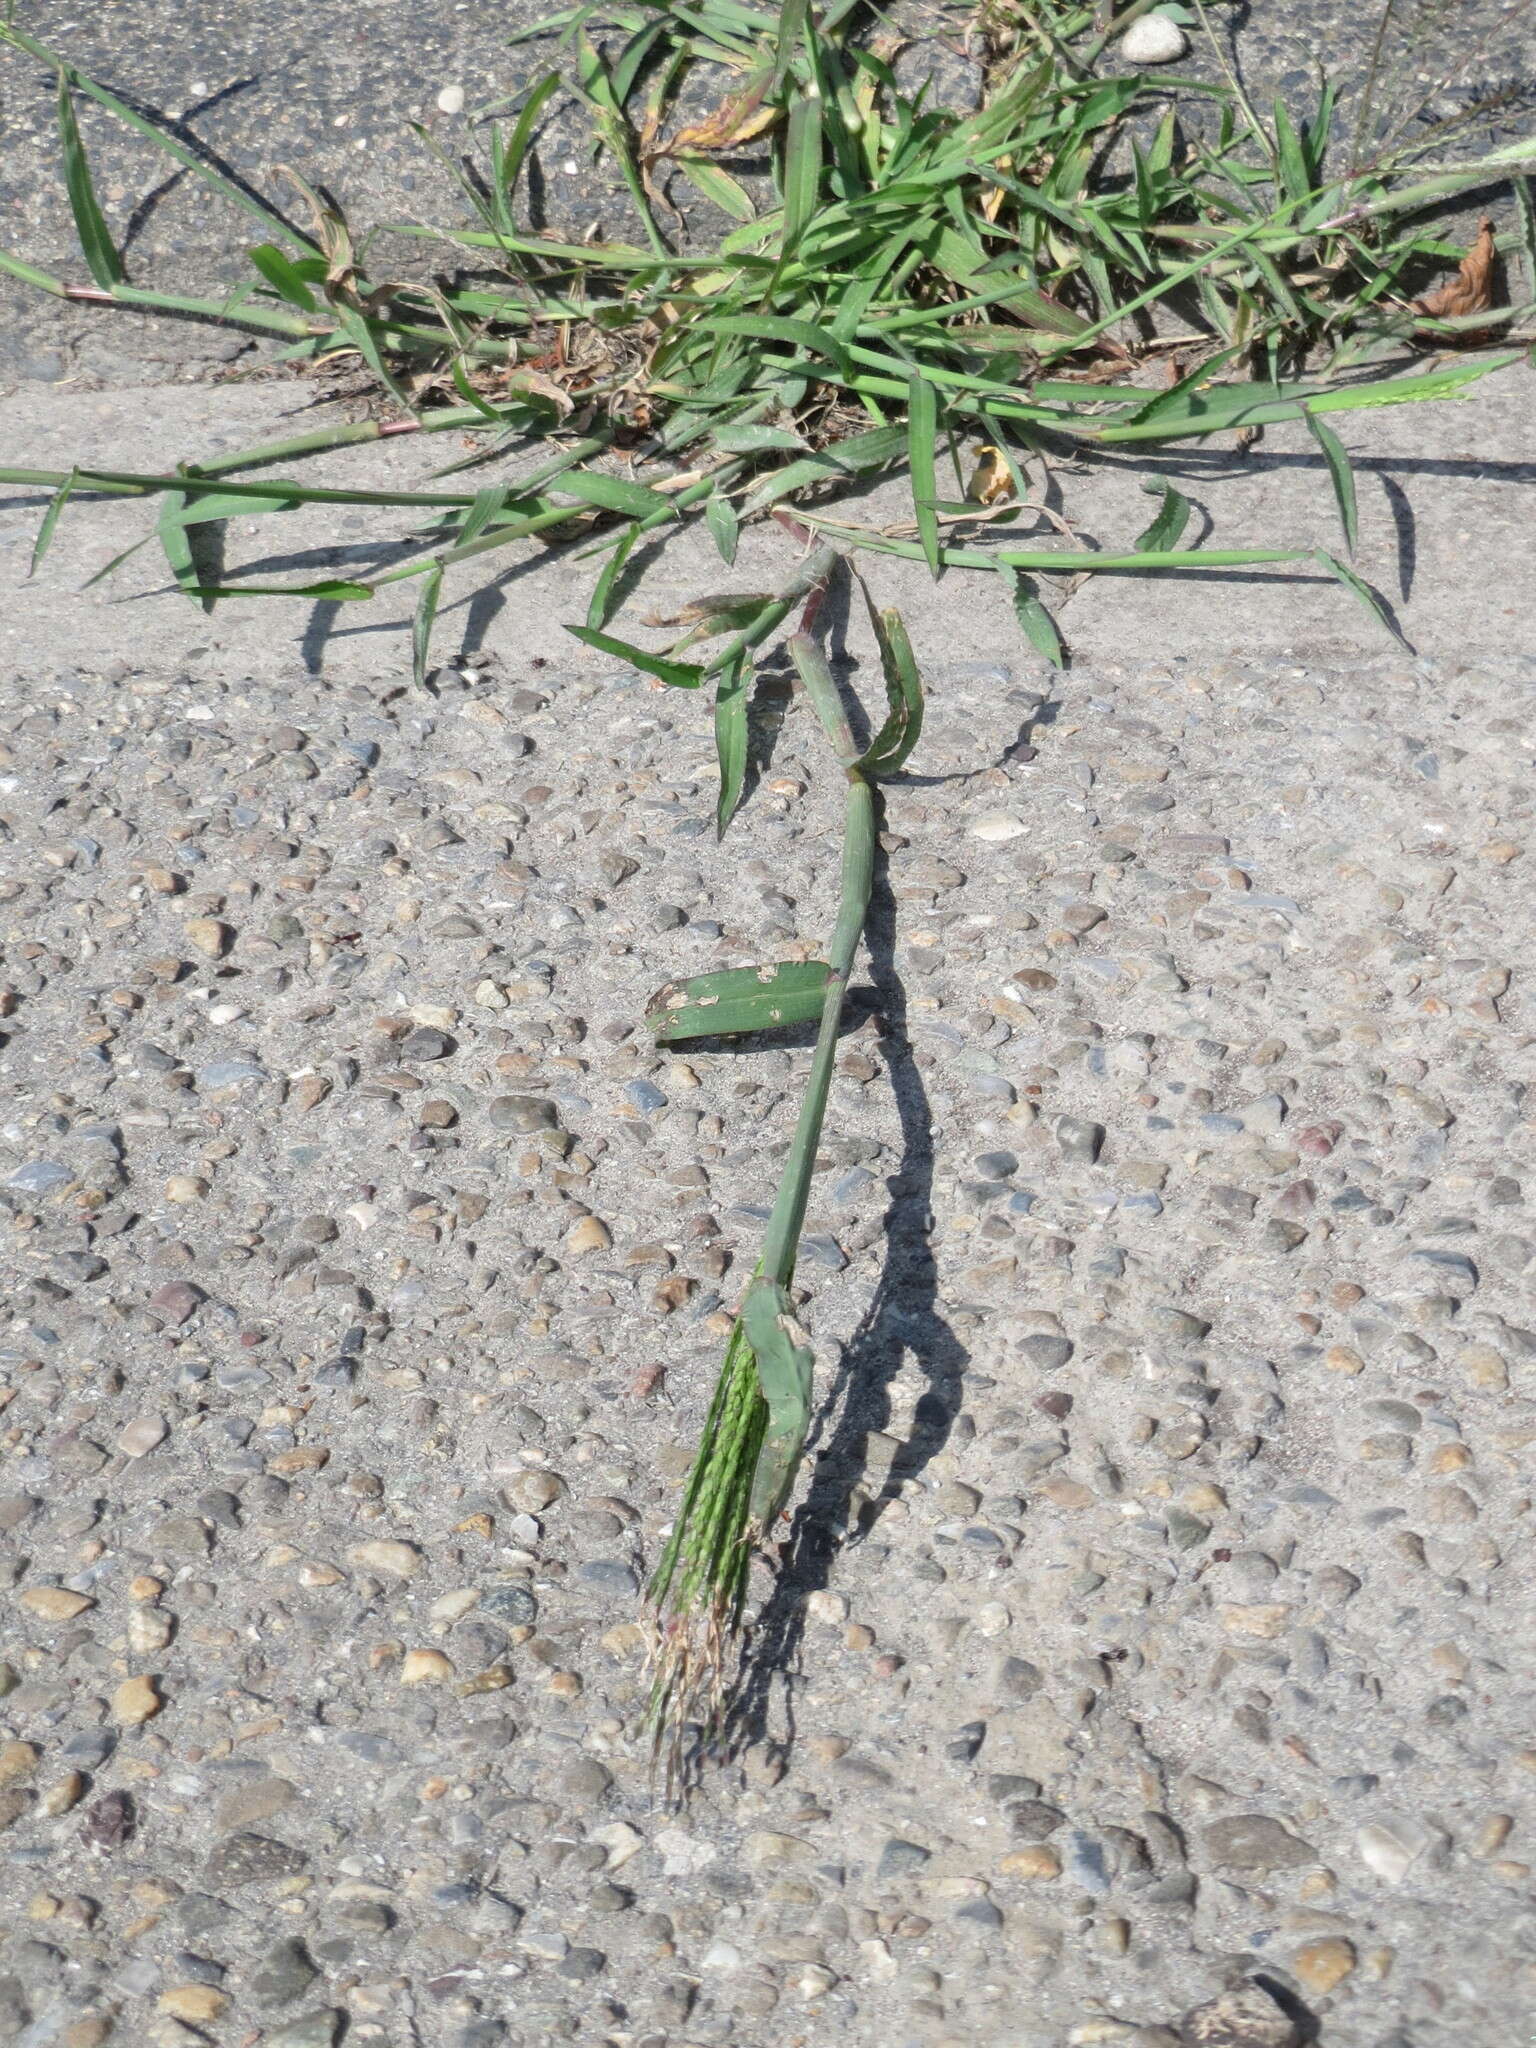 Image of hairy crabgrass